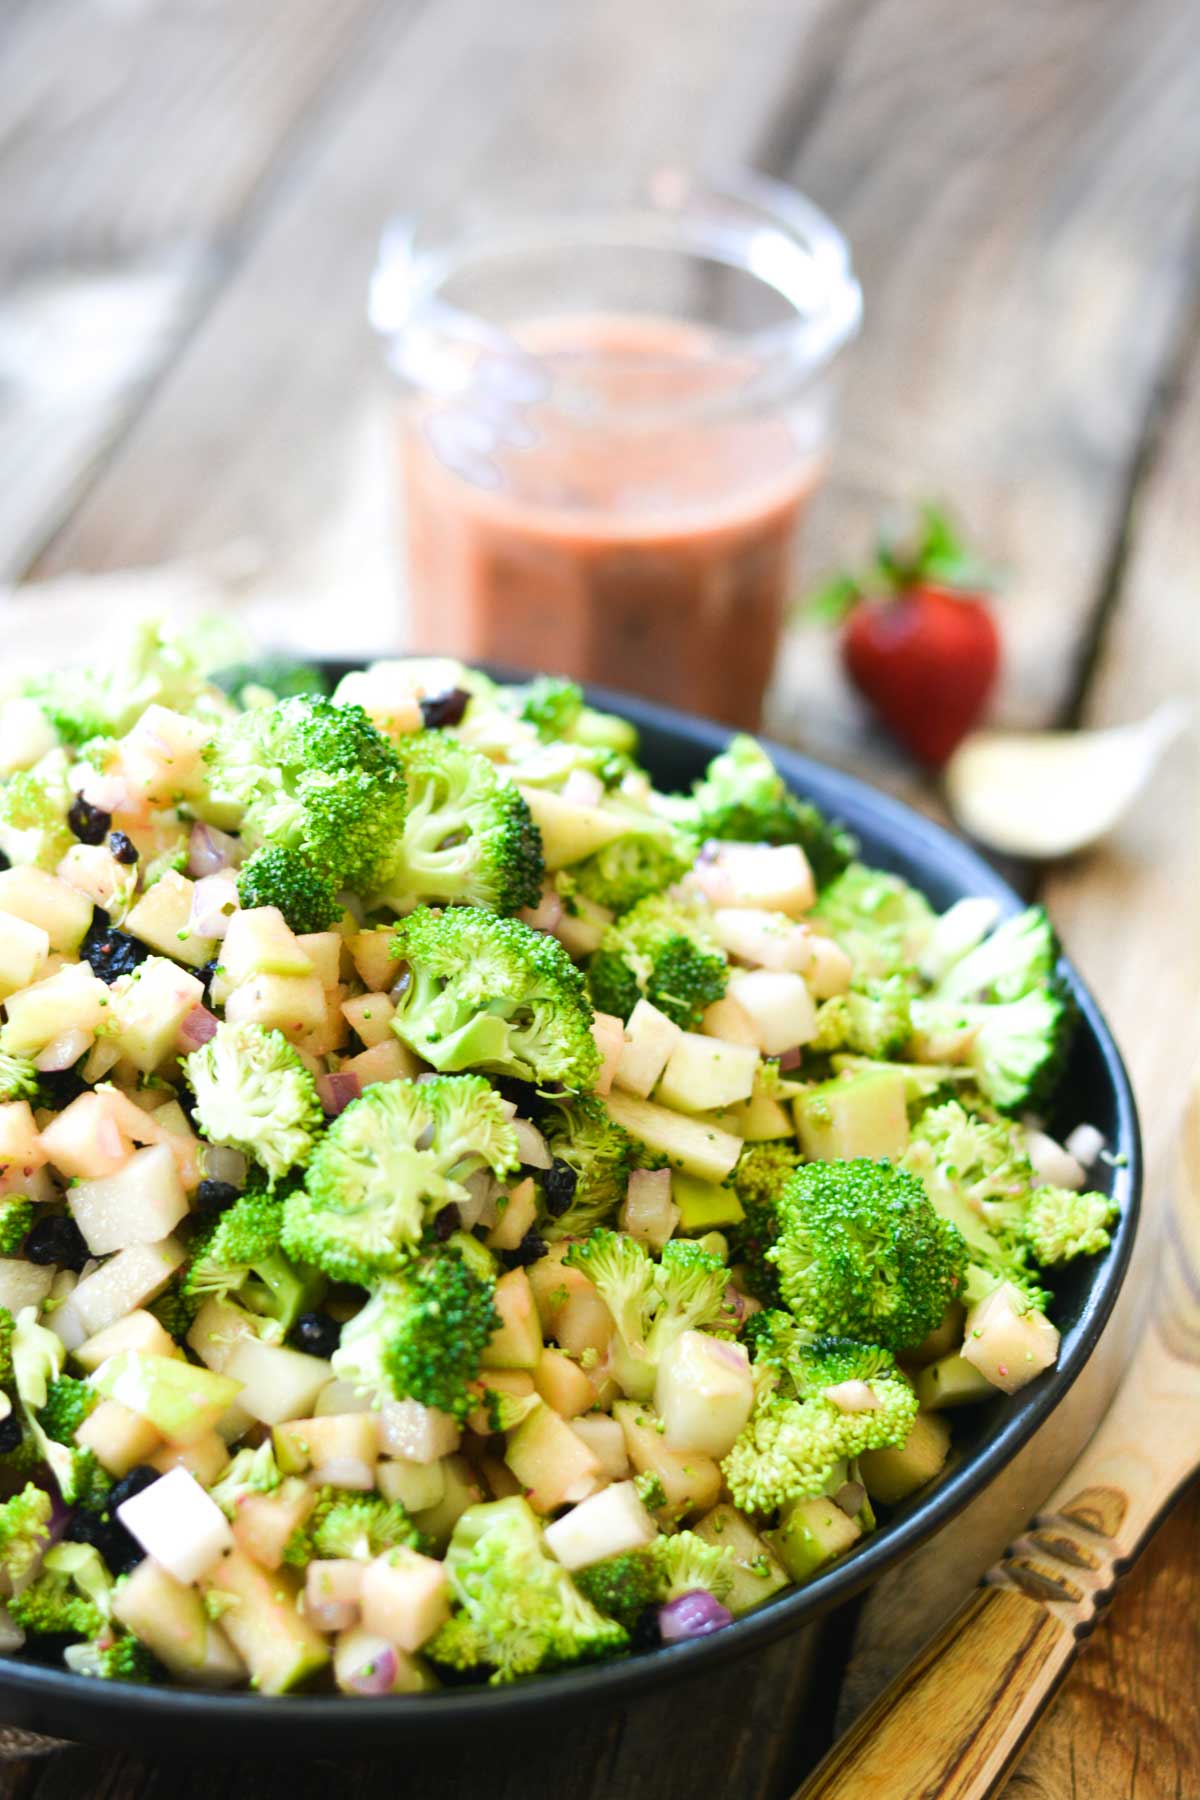 How to Make Healthy Broccoli Salad